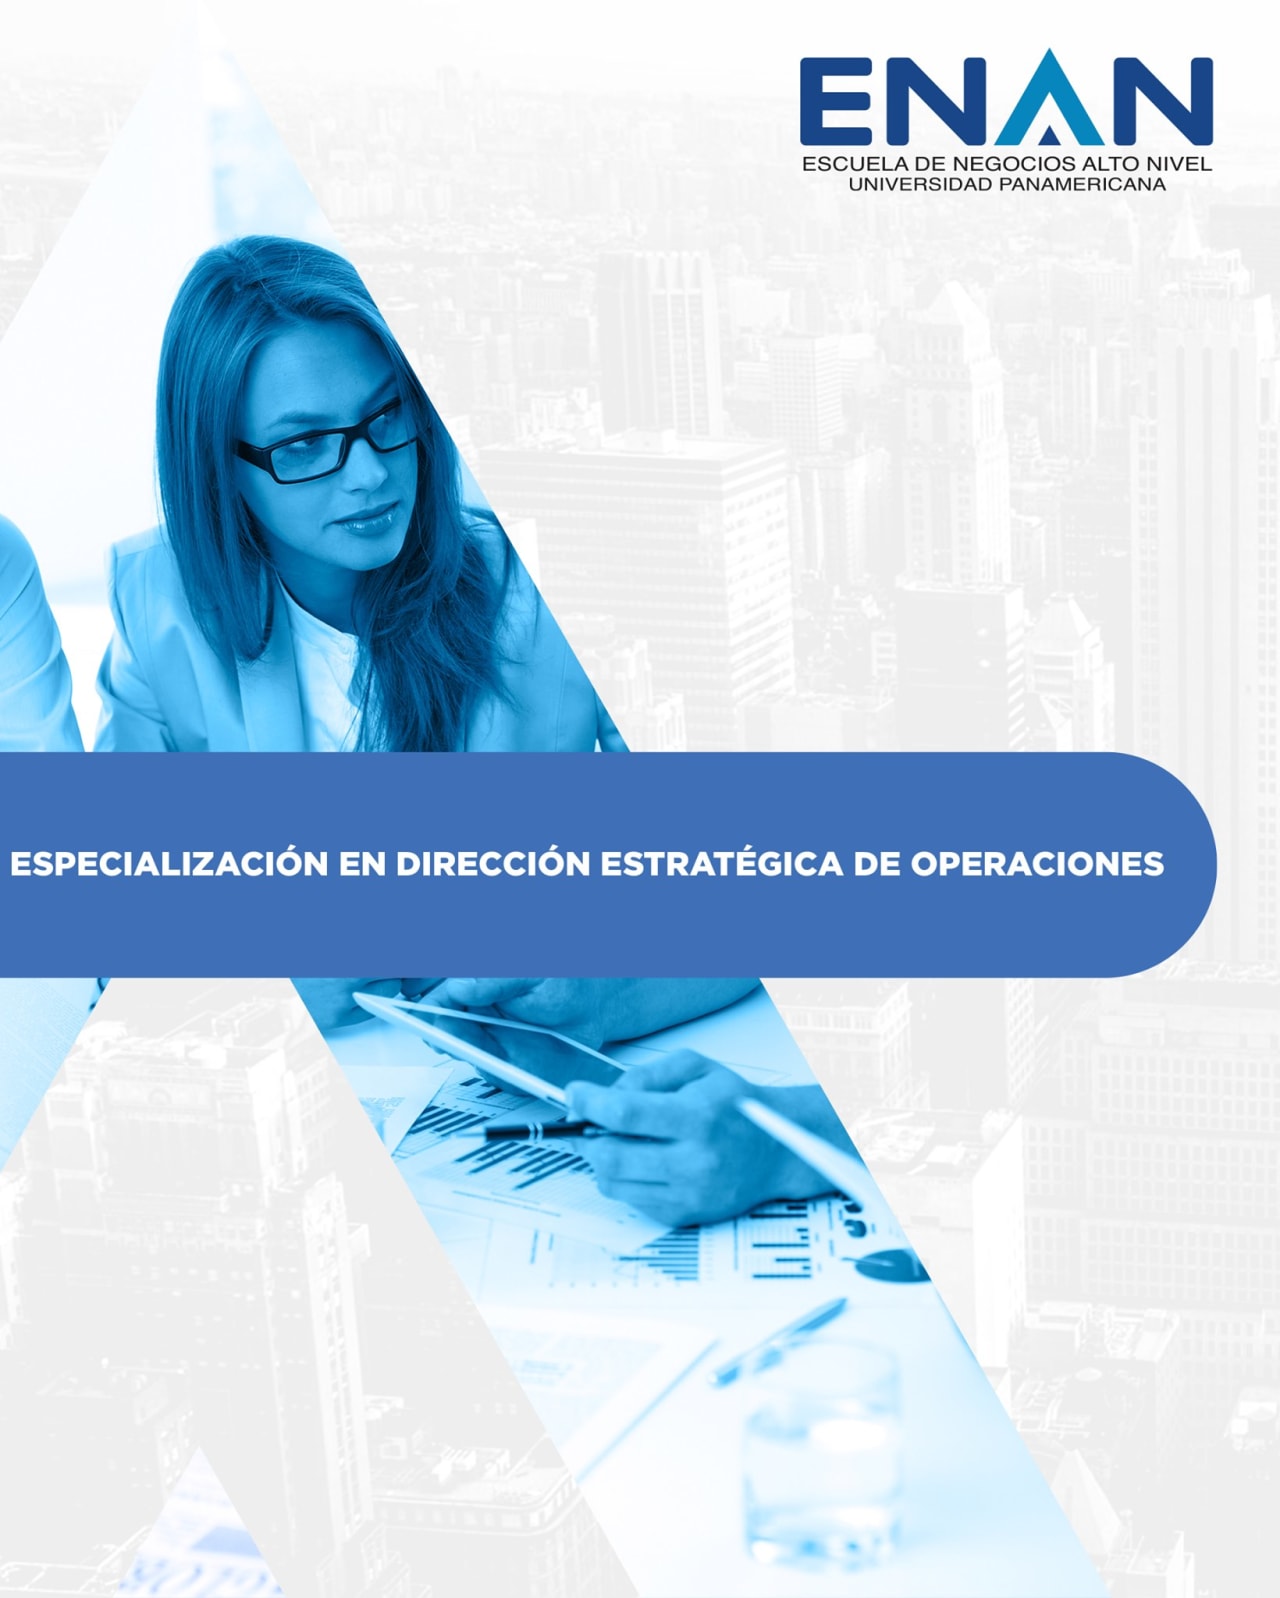 Escuela de Negocios Alto Nivel - Universidad Panamericana de Guatemala Spécialisation en gestion des opérations stratégiques